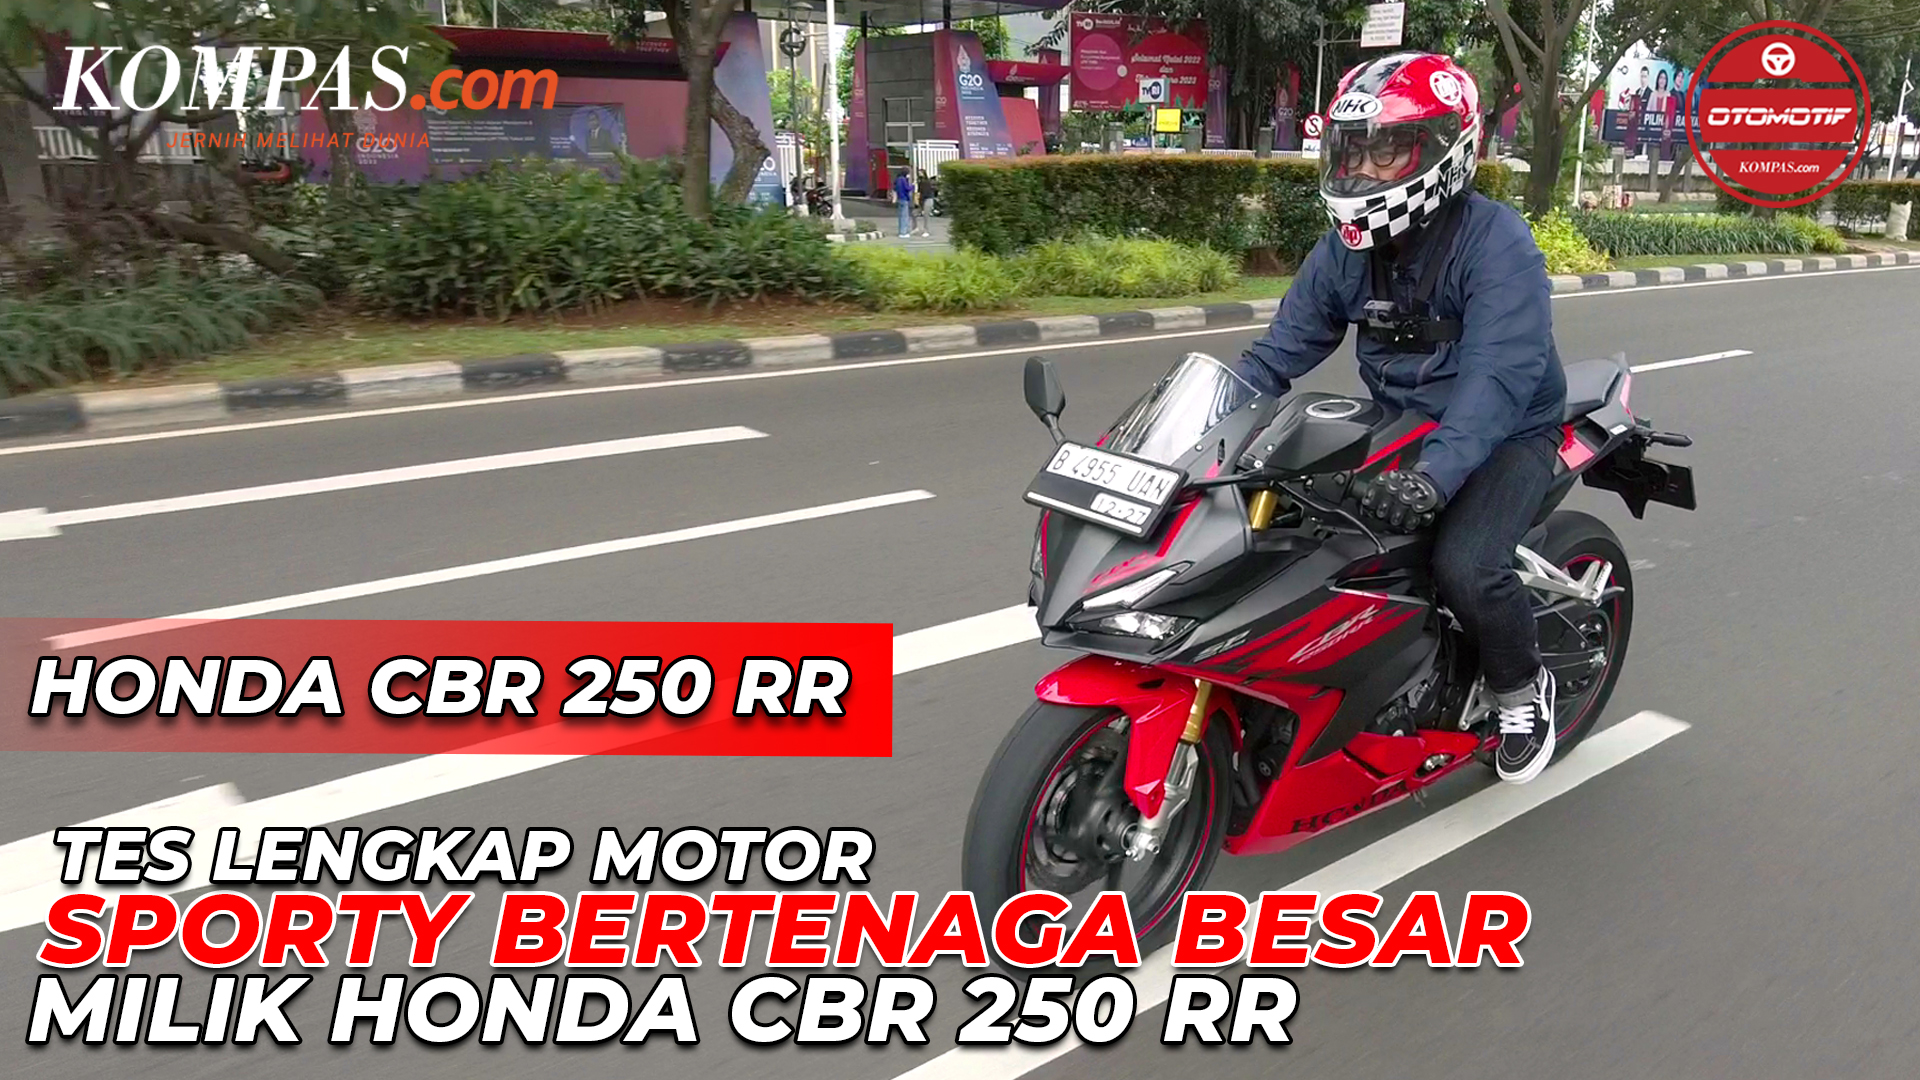 TEST RIDE | HONDA CBR 250 RR |Tes Lengkap Motor Sporty Bertenaga Besar Milik Honda CBR 250 RR